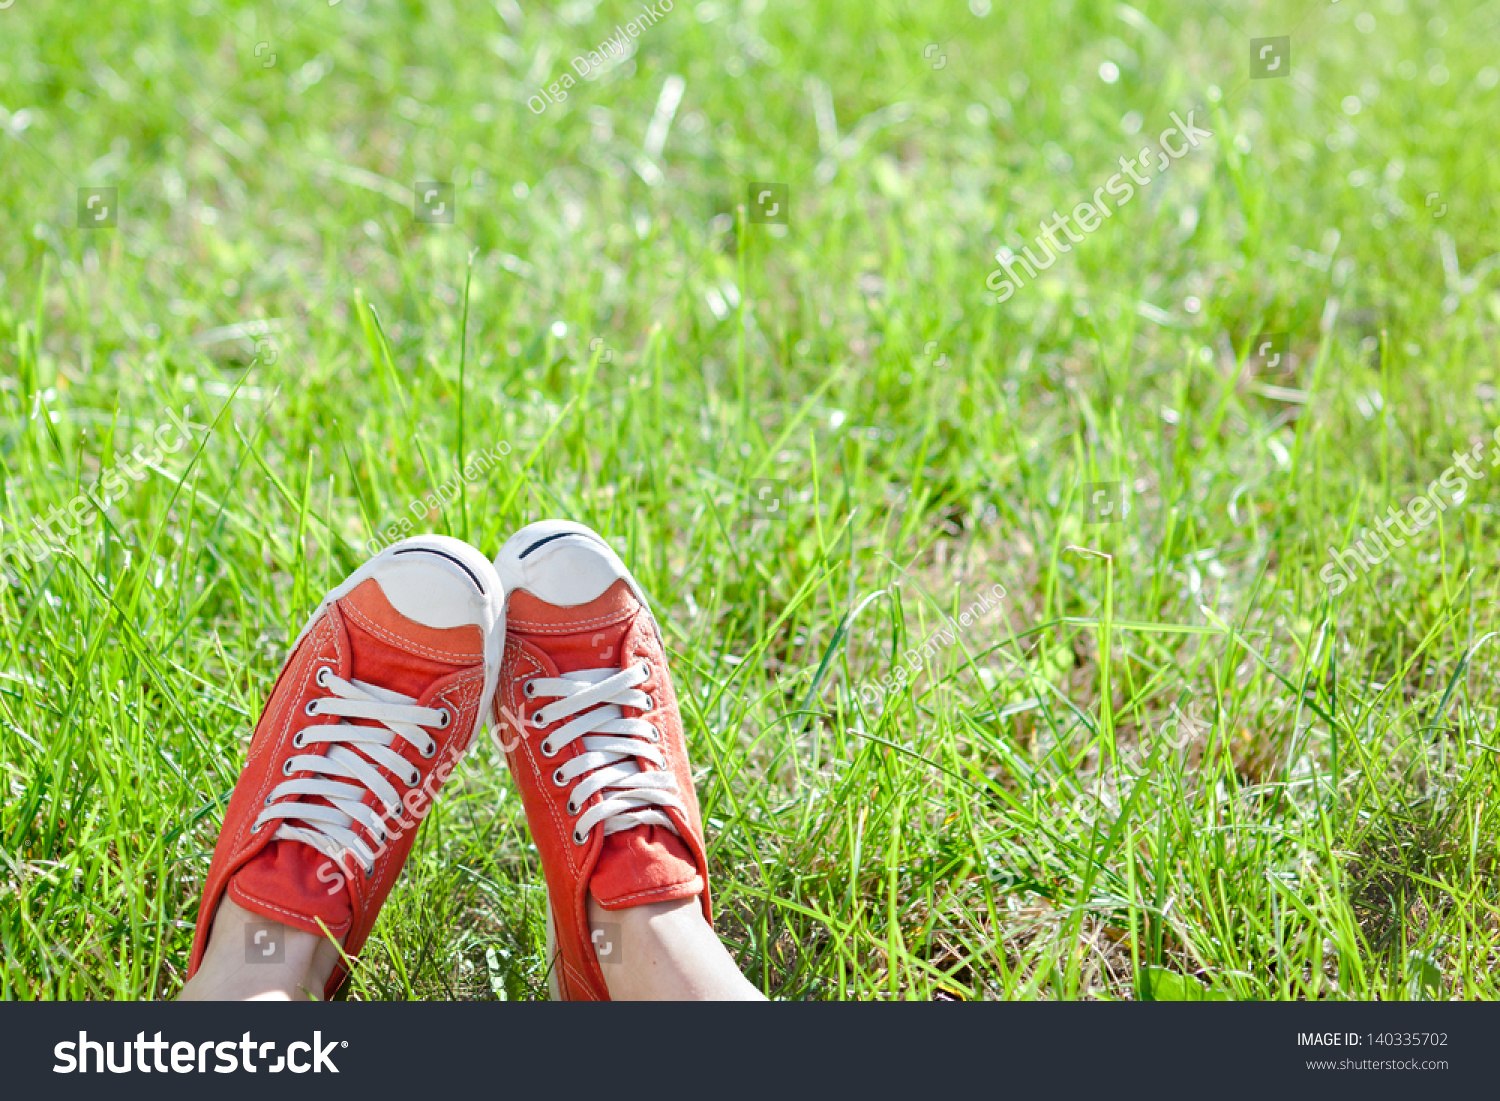 Feet in sneakers on green grass  #140335702